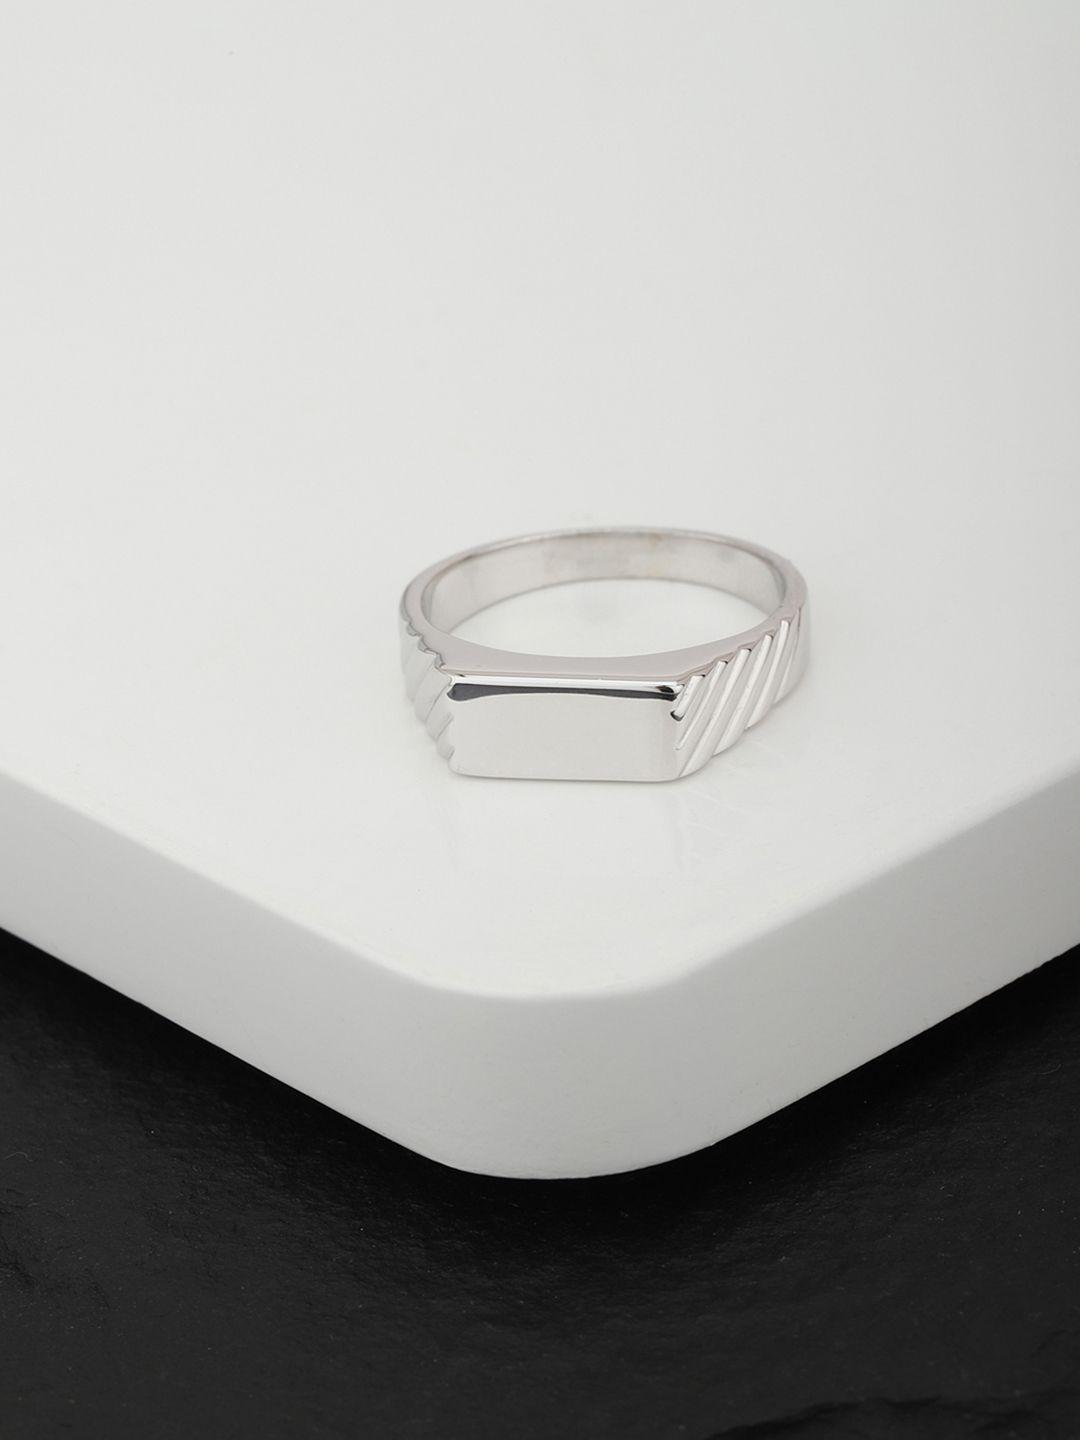 carlton-london-925-sterling-silver-men-rhodium-plated-textured-finger-ring